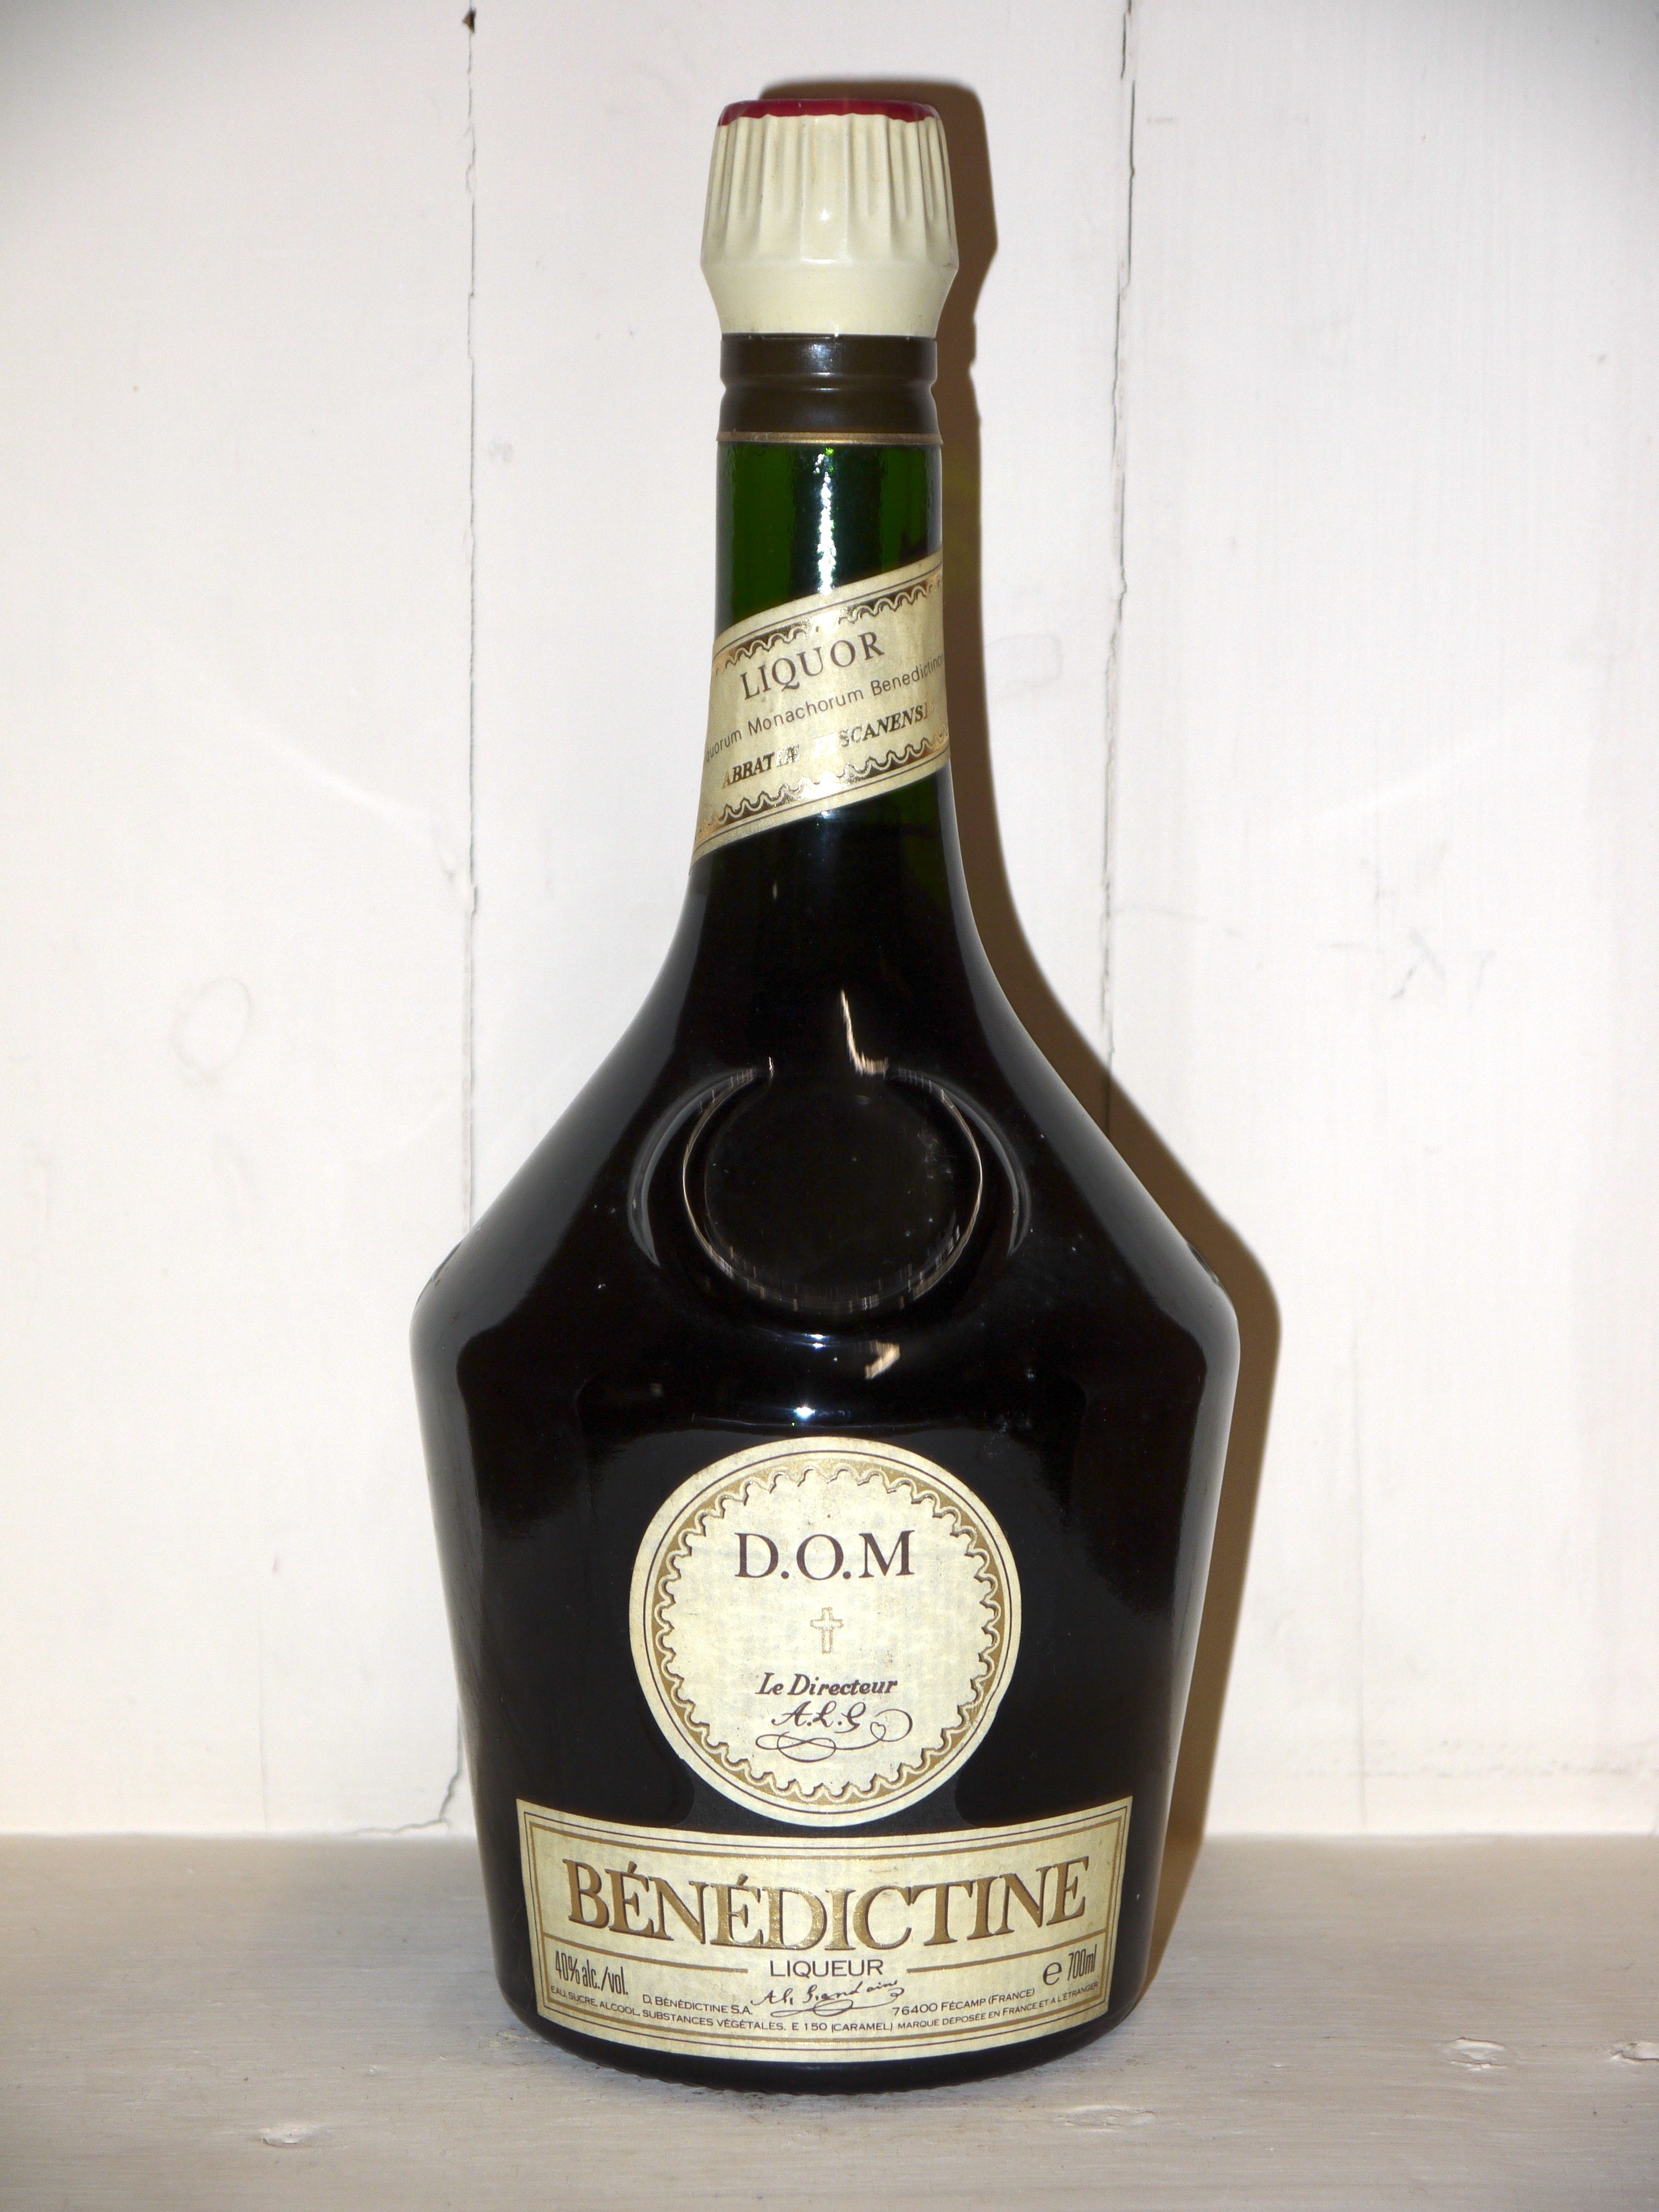 liquore dom benedictine liqueur cl.70